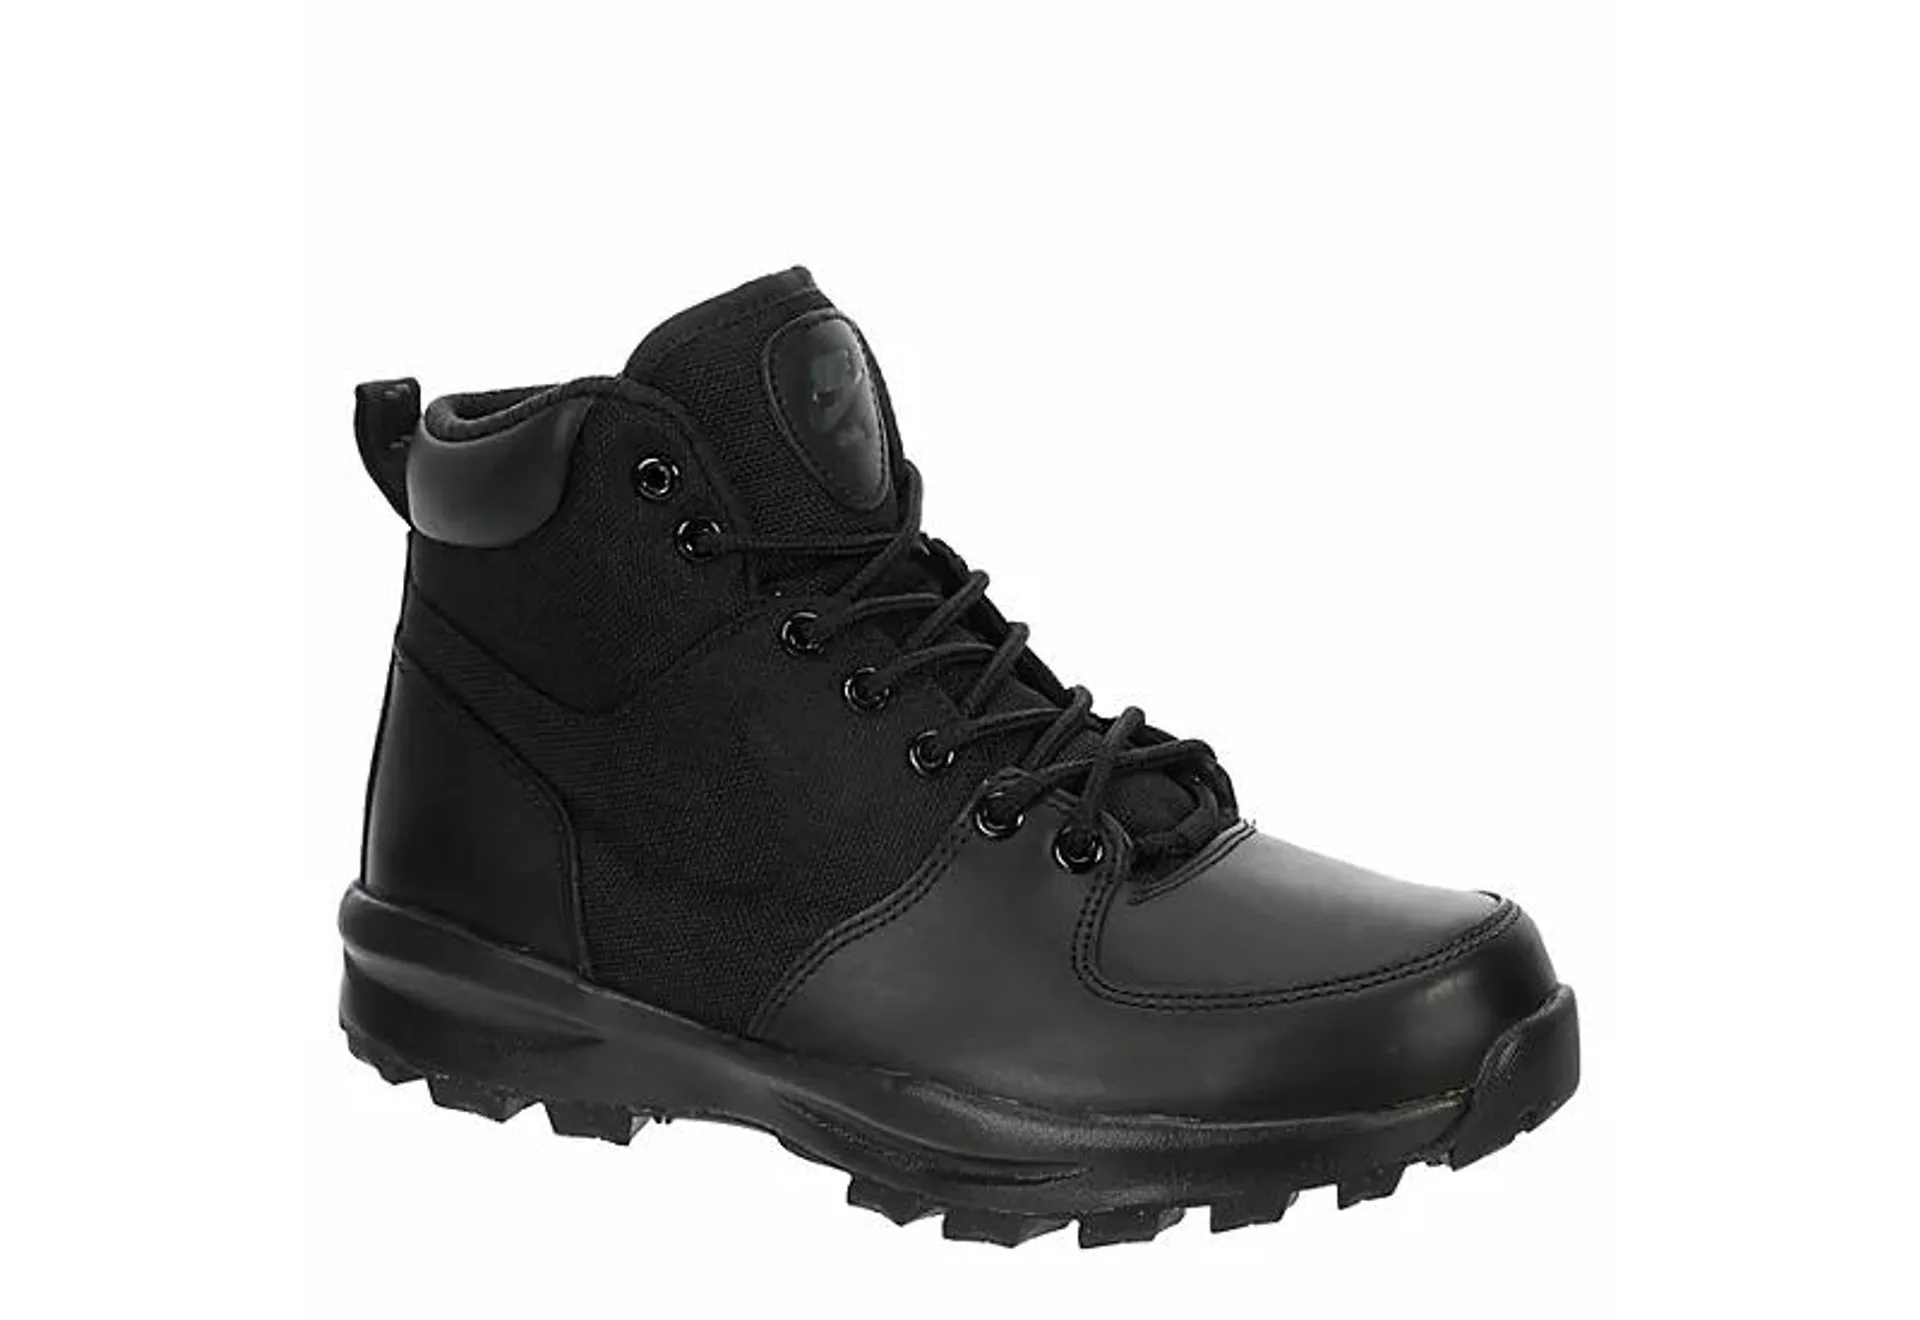 Nike Mens Manoa Lace-up Boot - Black